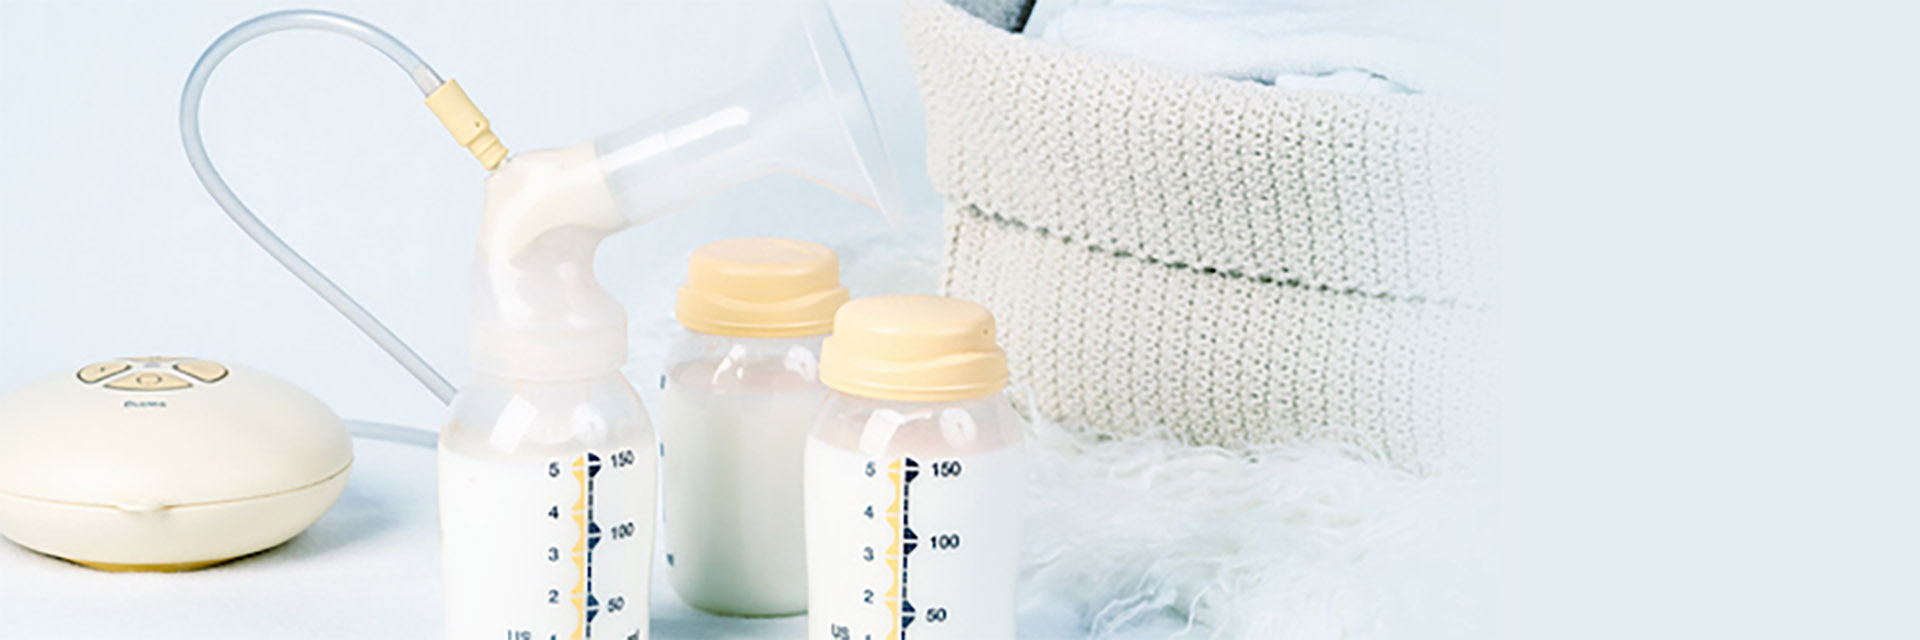 Breast pump and milk